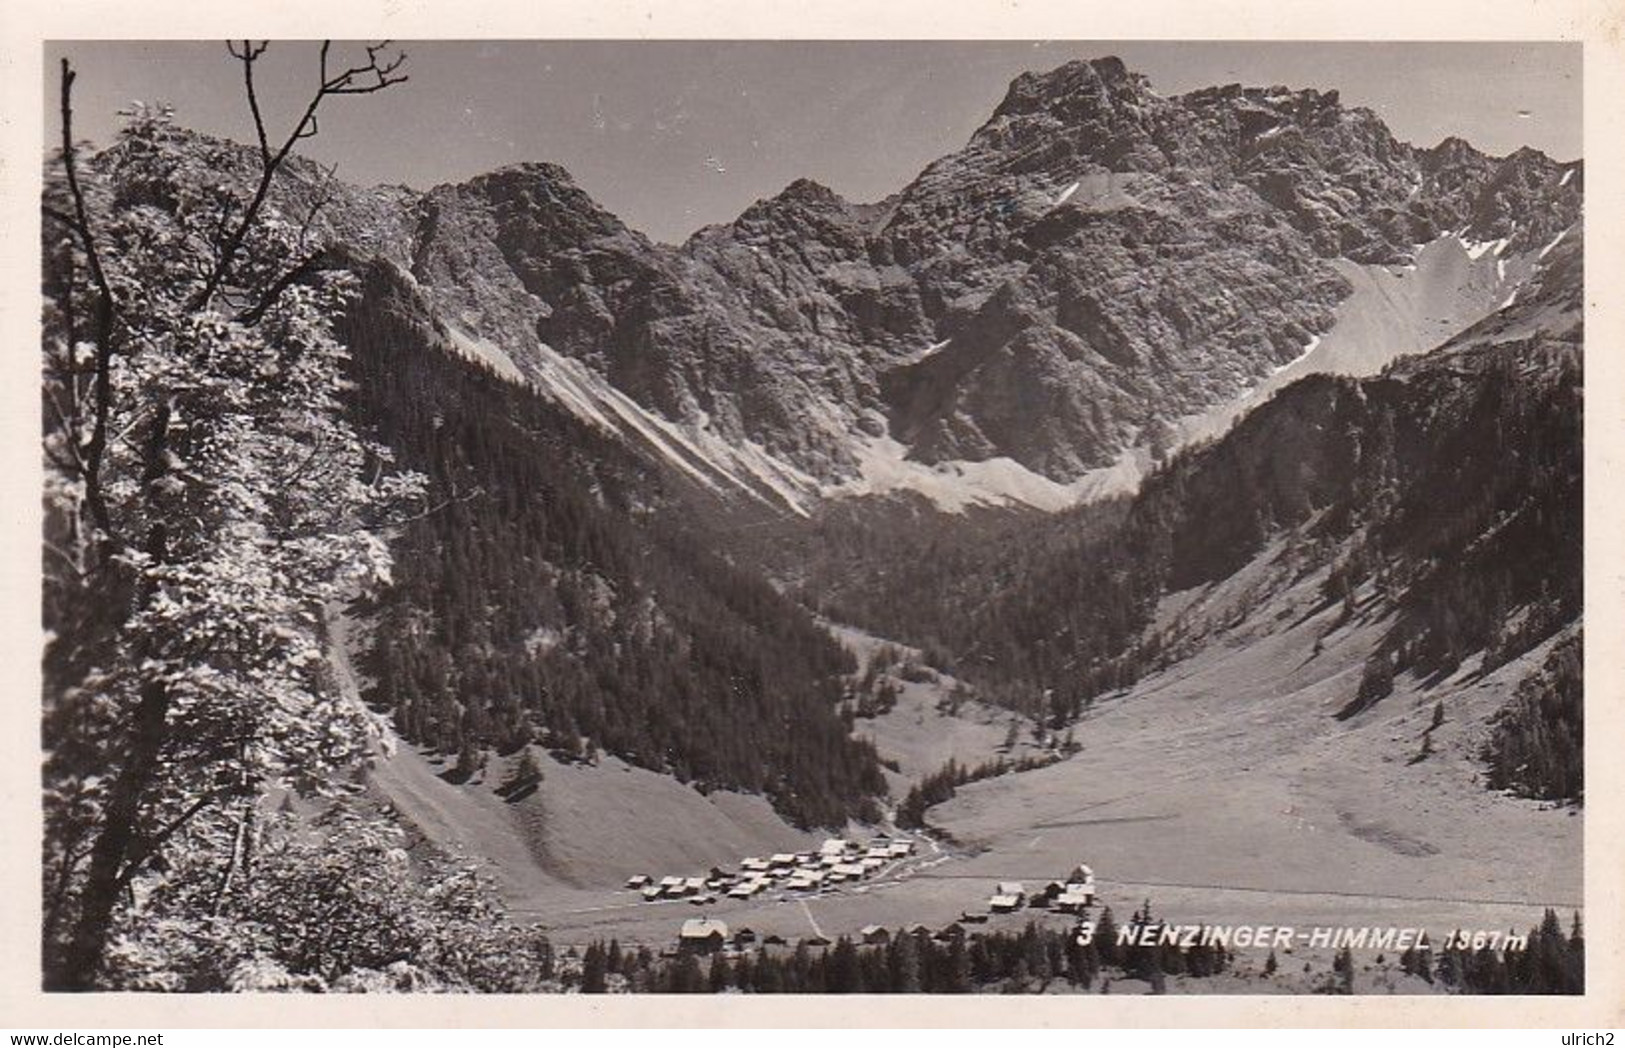 AK Nenzinger Himmel - Stempel Unterkunftshütte St. Rochus - 1954 (52993) - Nenzing